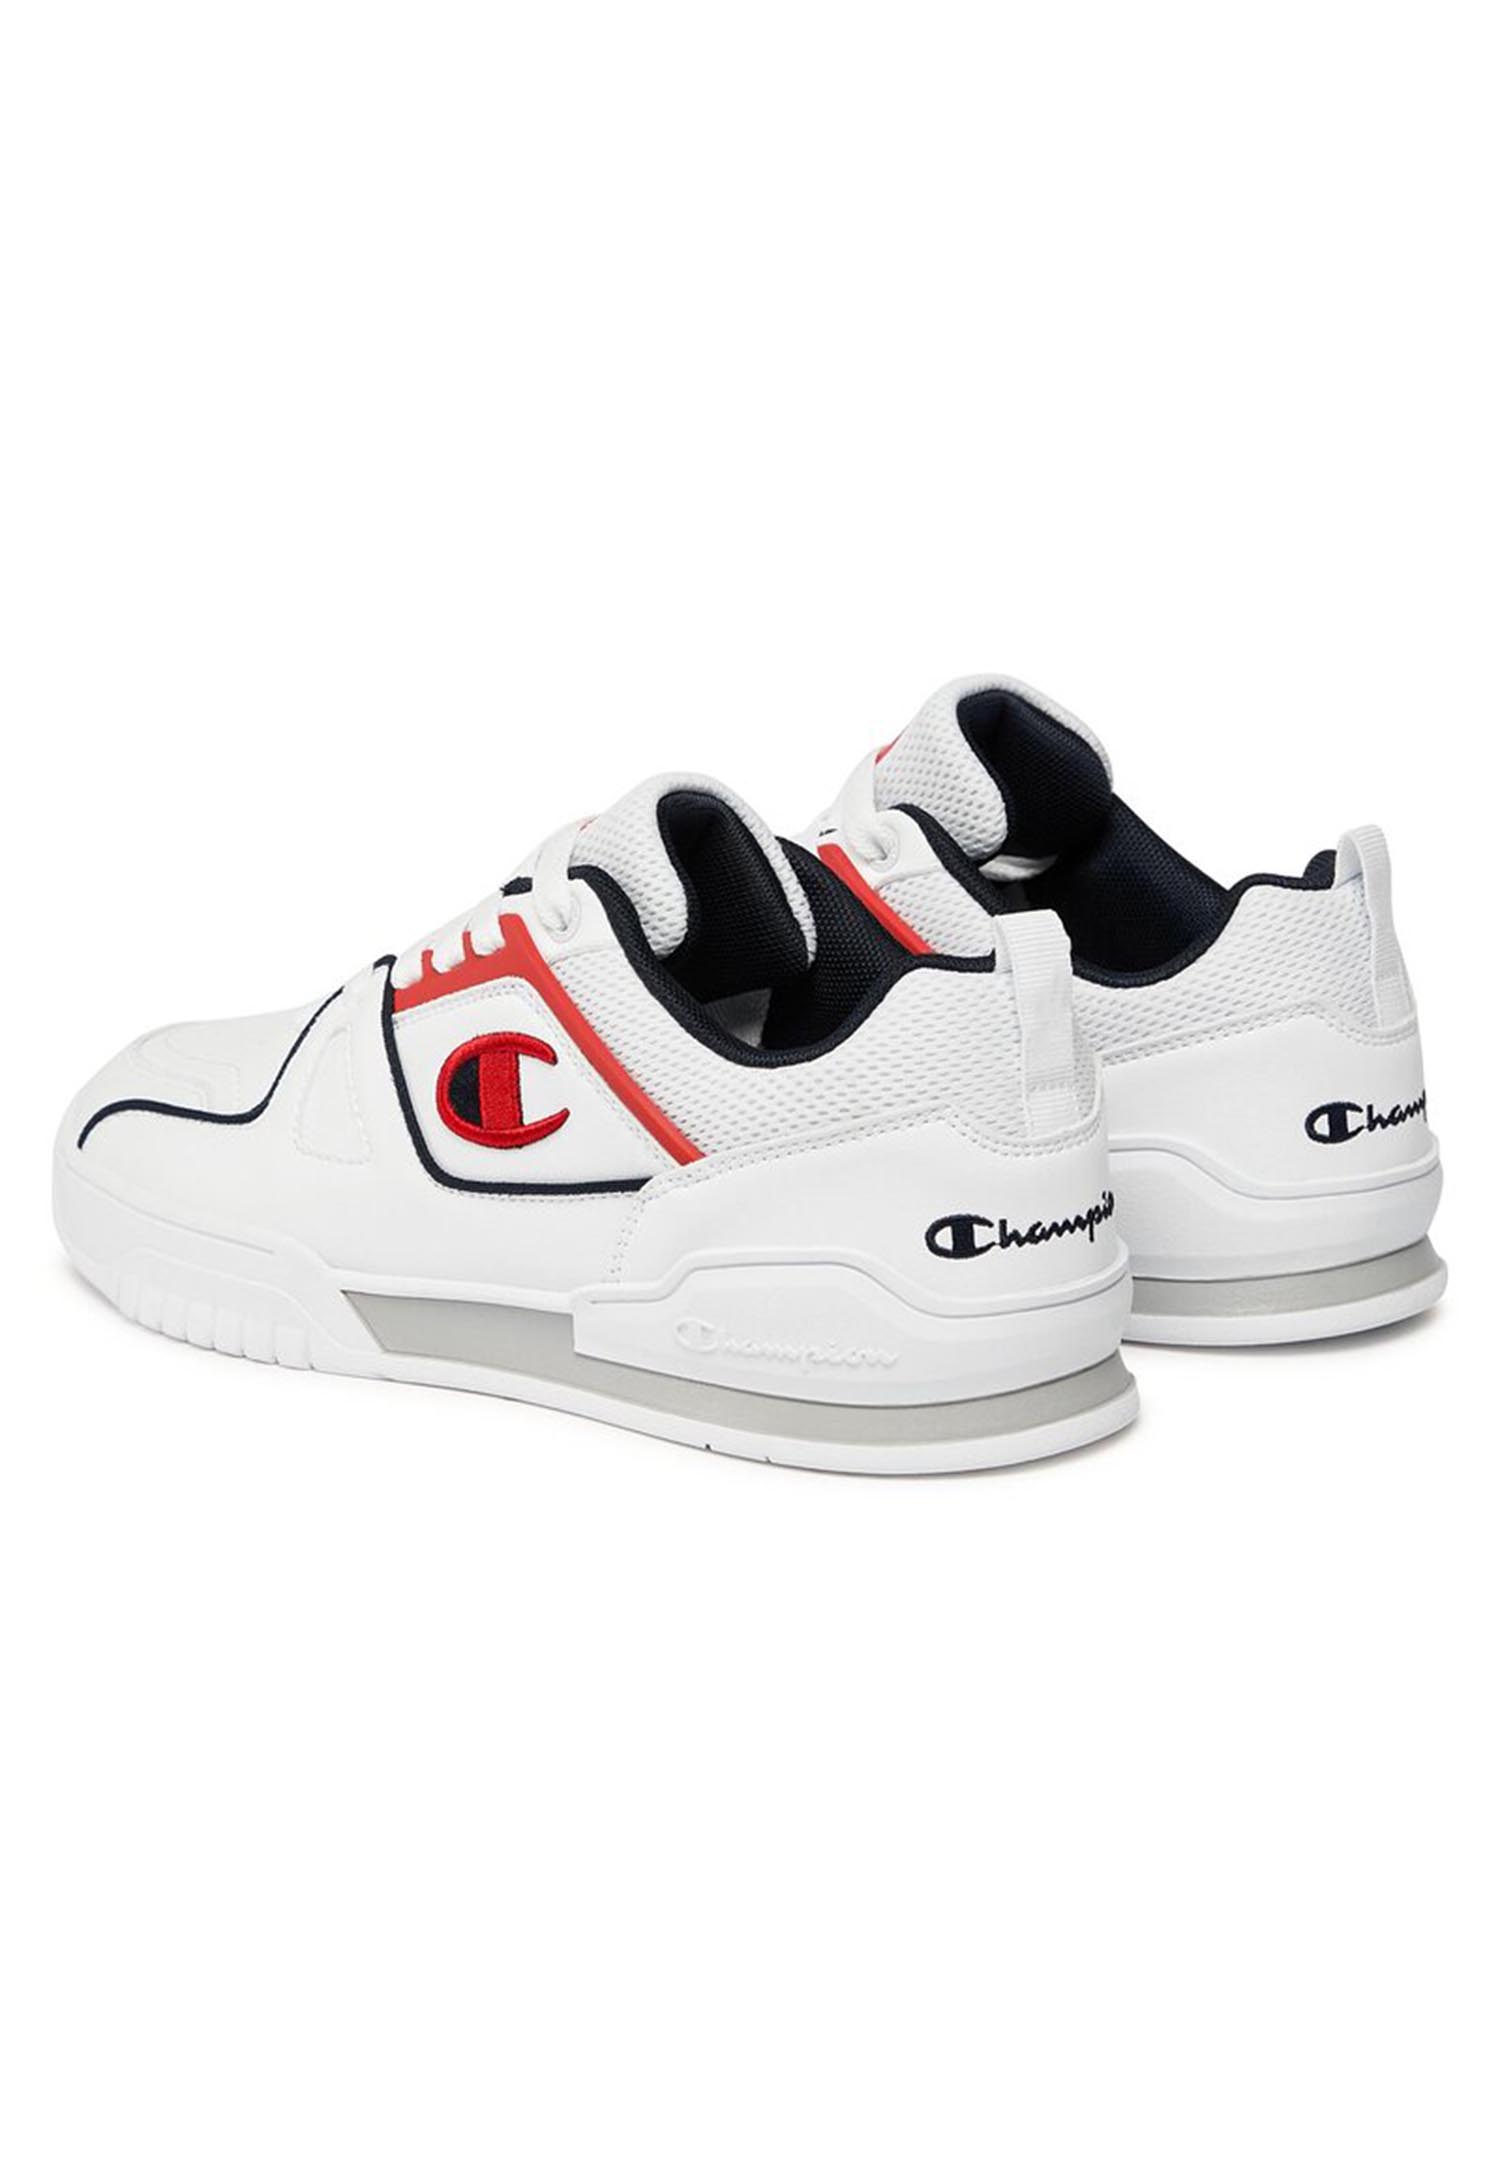 Champion 3 Point Low Herren Sneaker S21882-CHA-WW010 weiß/blau/rot